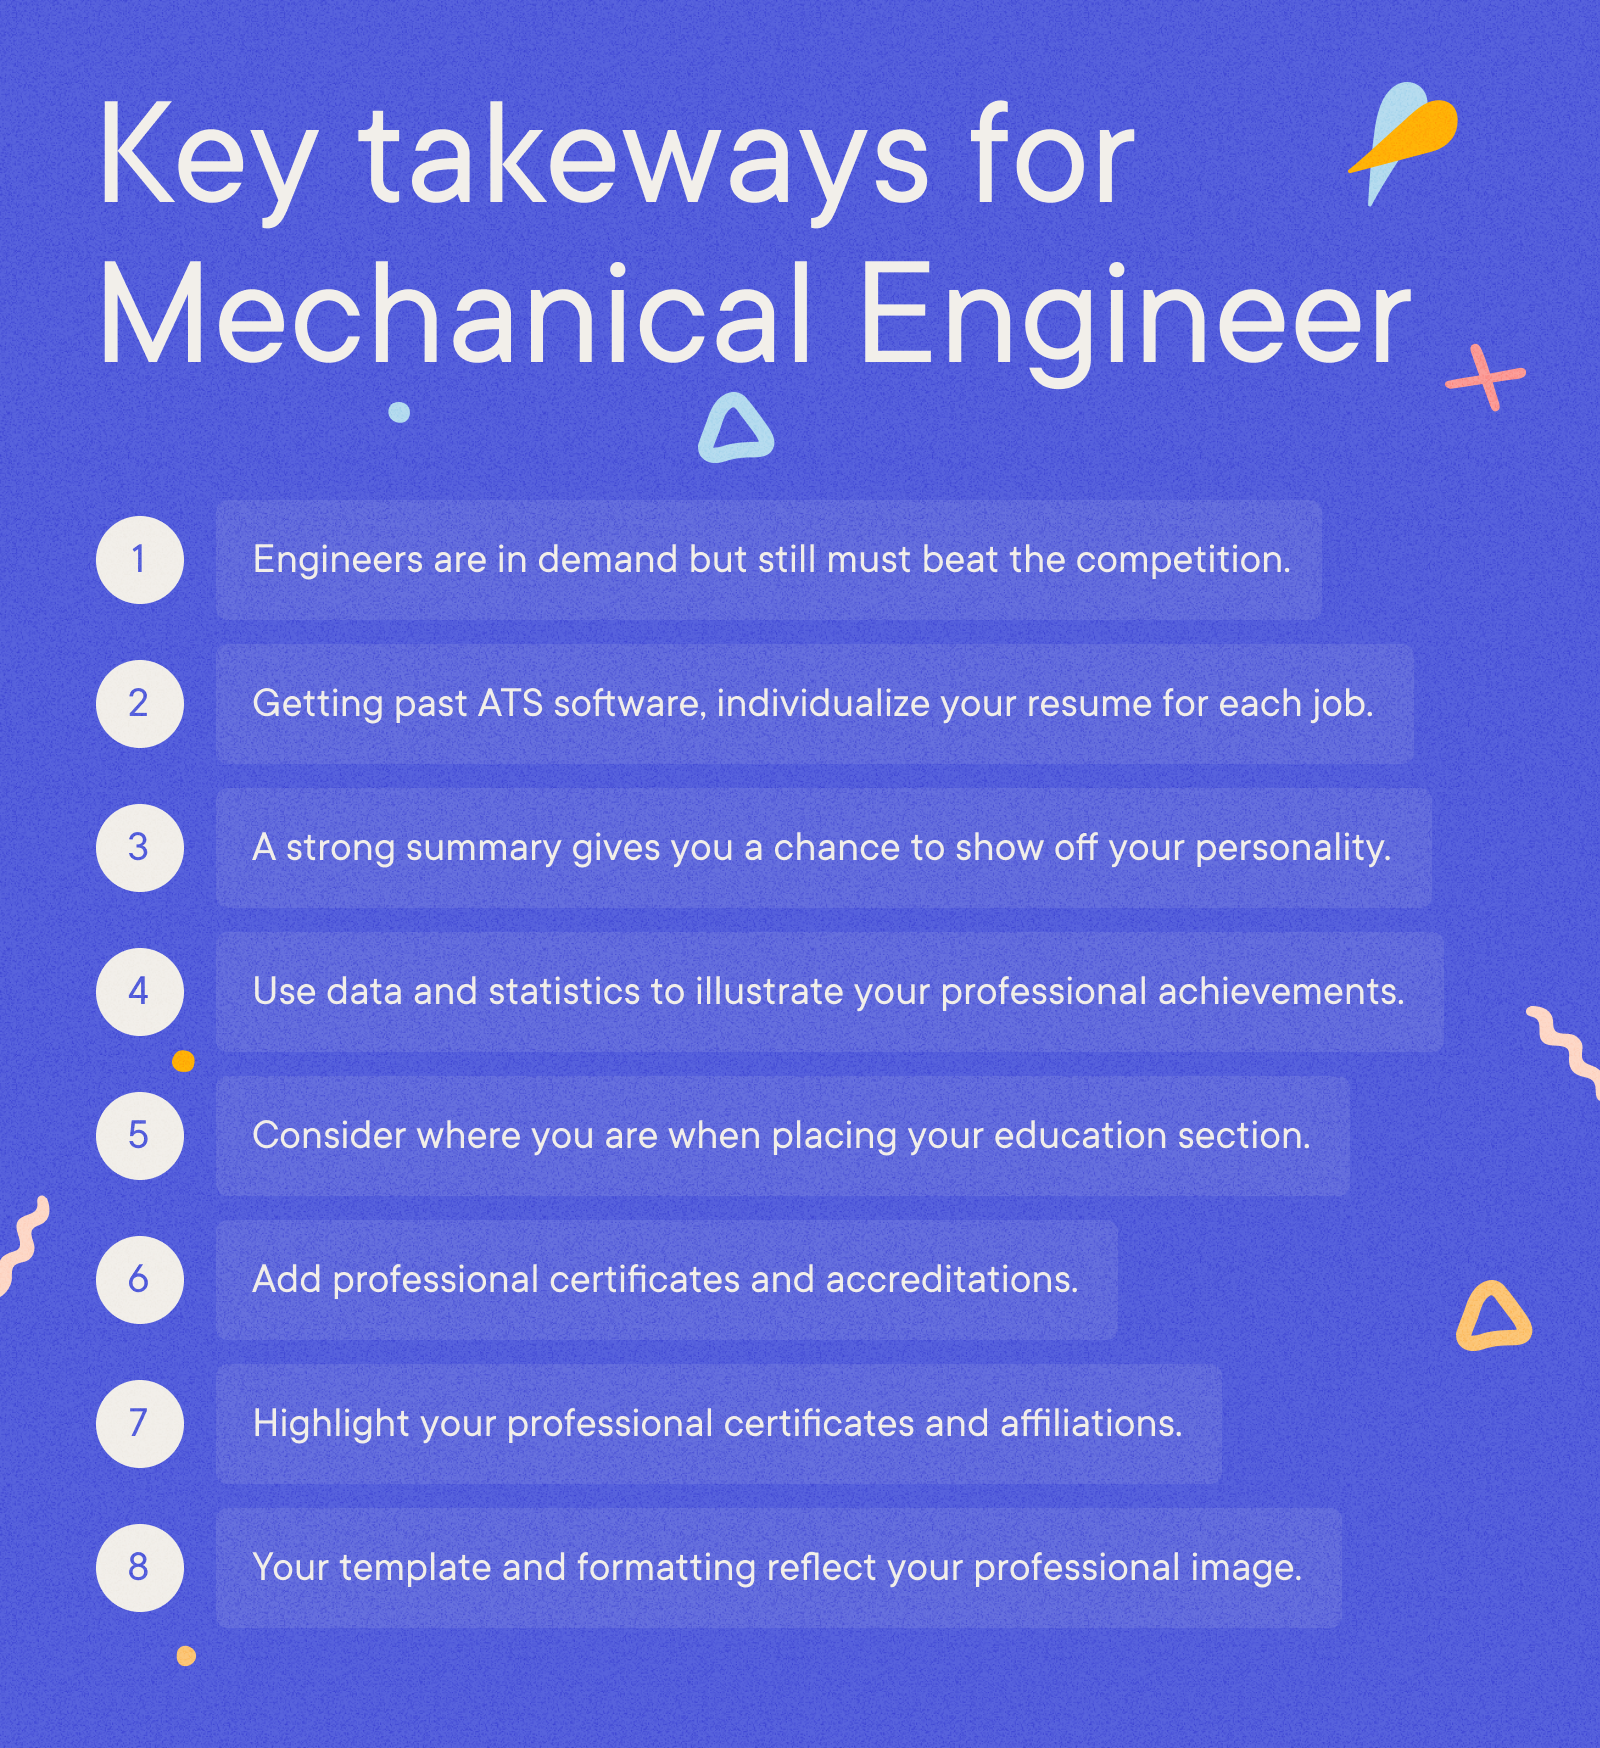 Mechanical Engineer Resume Example - Key takeways for Mechanical Engineer